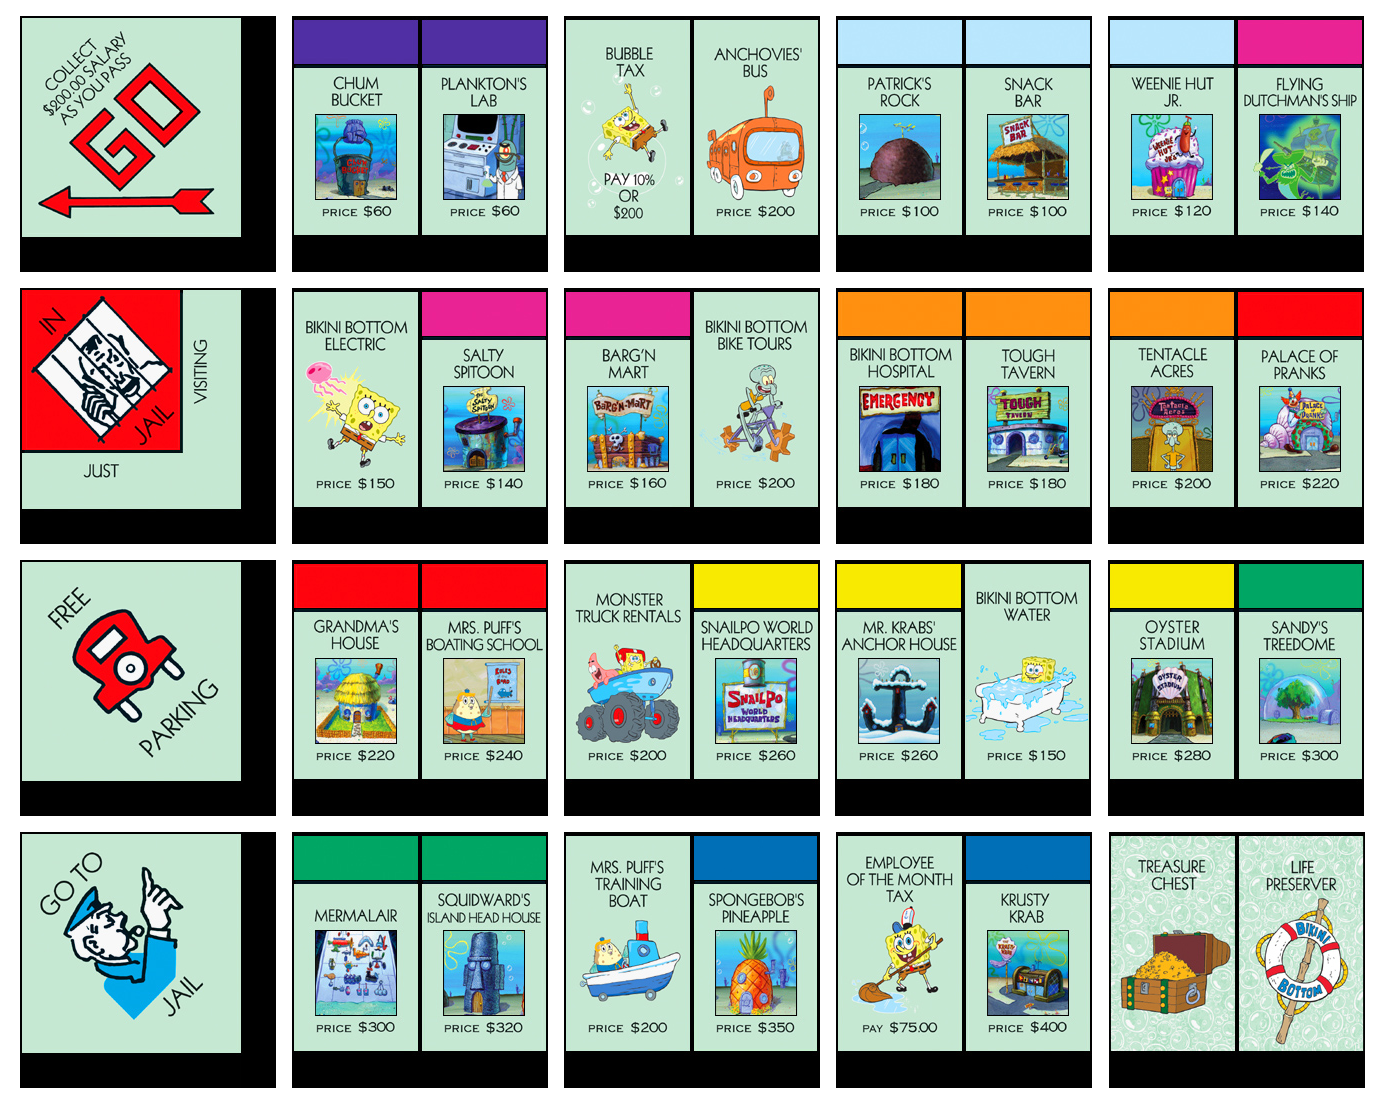 online spongebob monopoly game